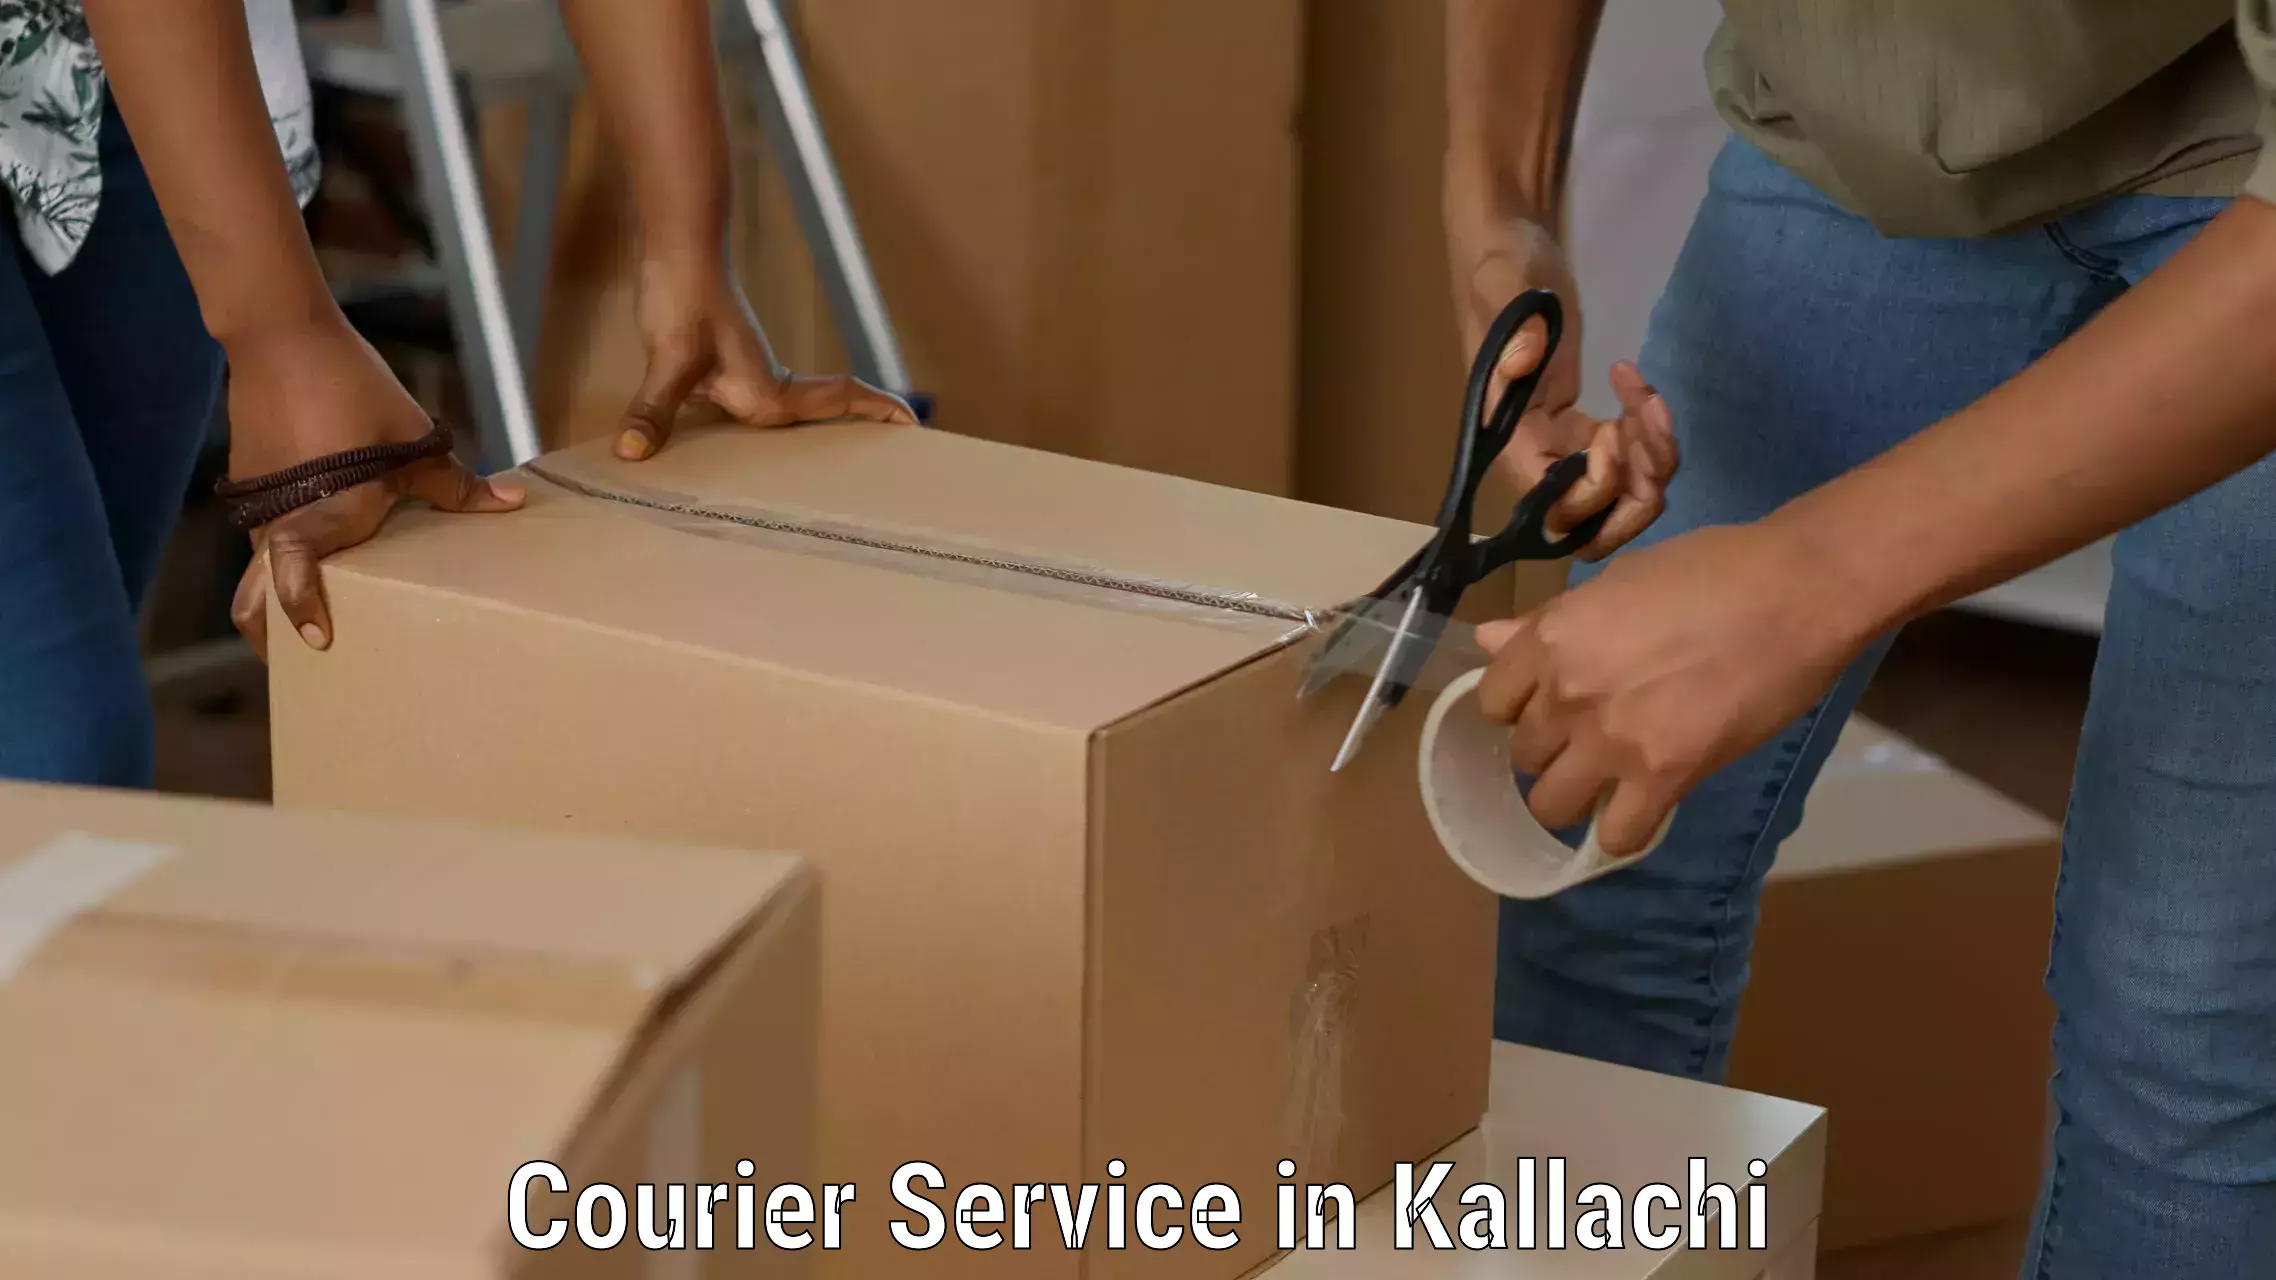 Bulk shipment in Kallachi